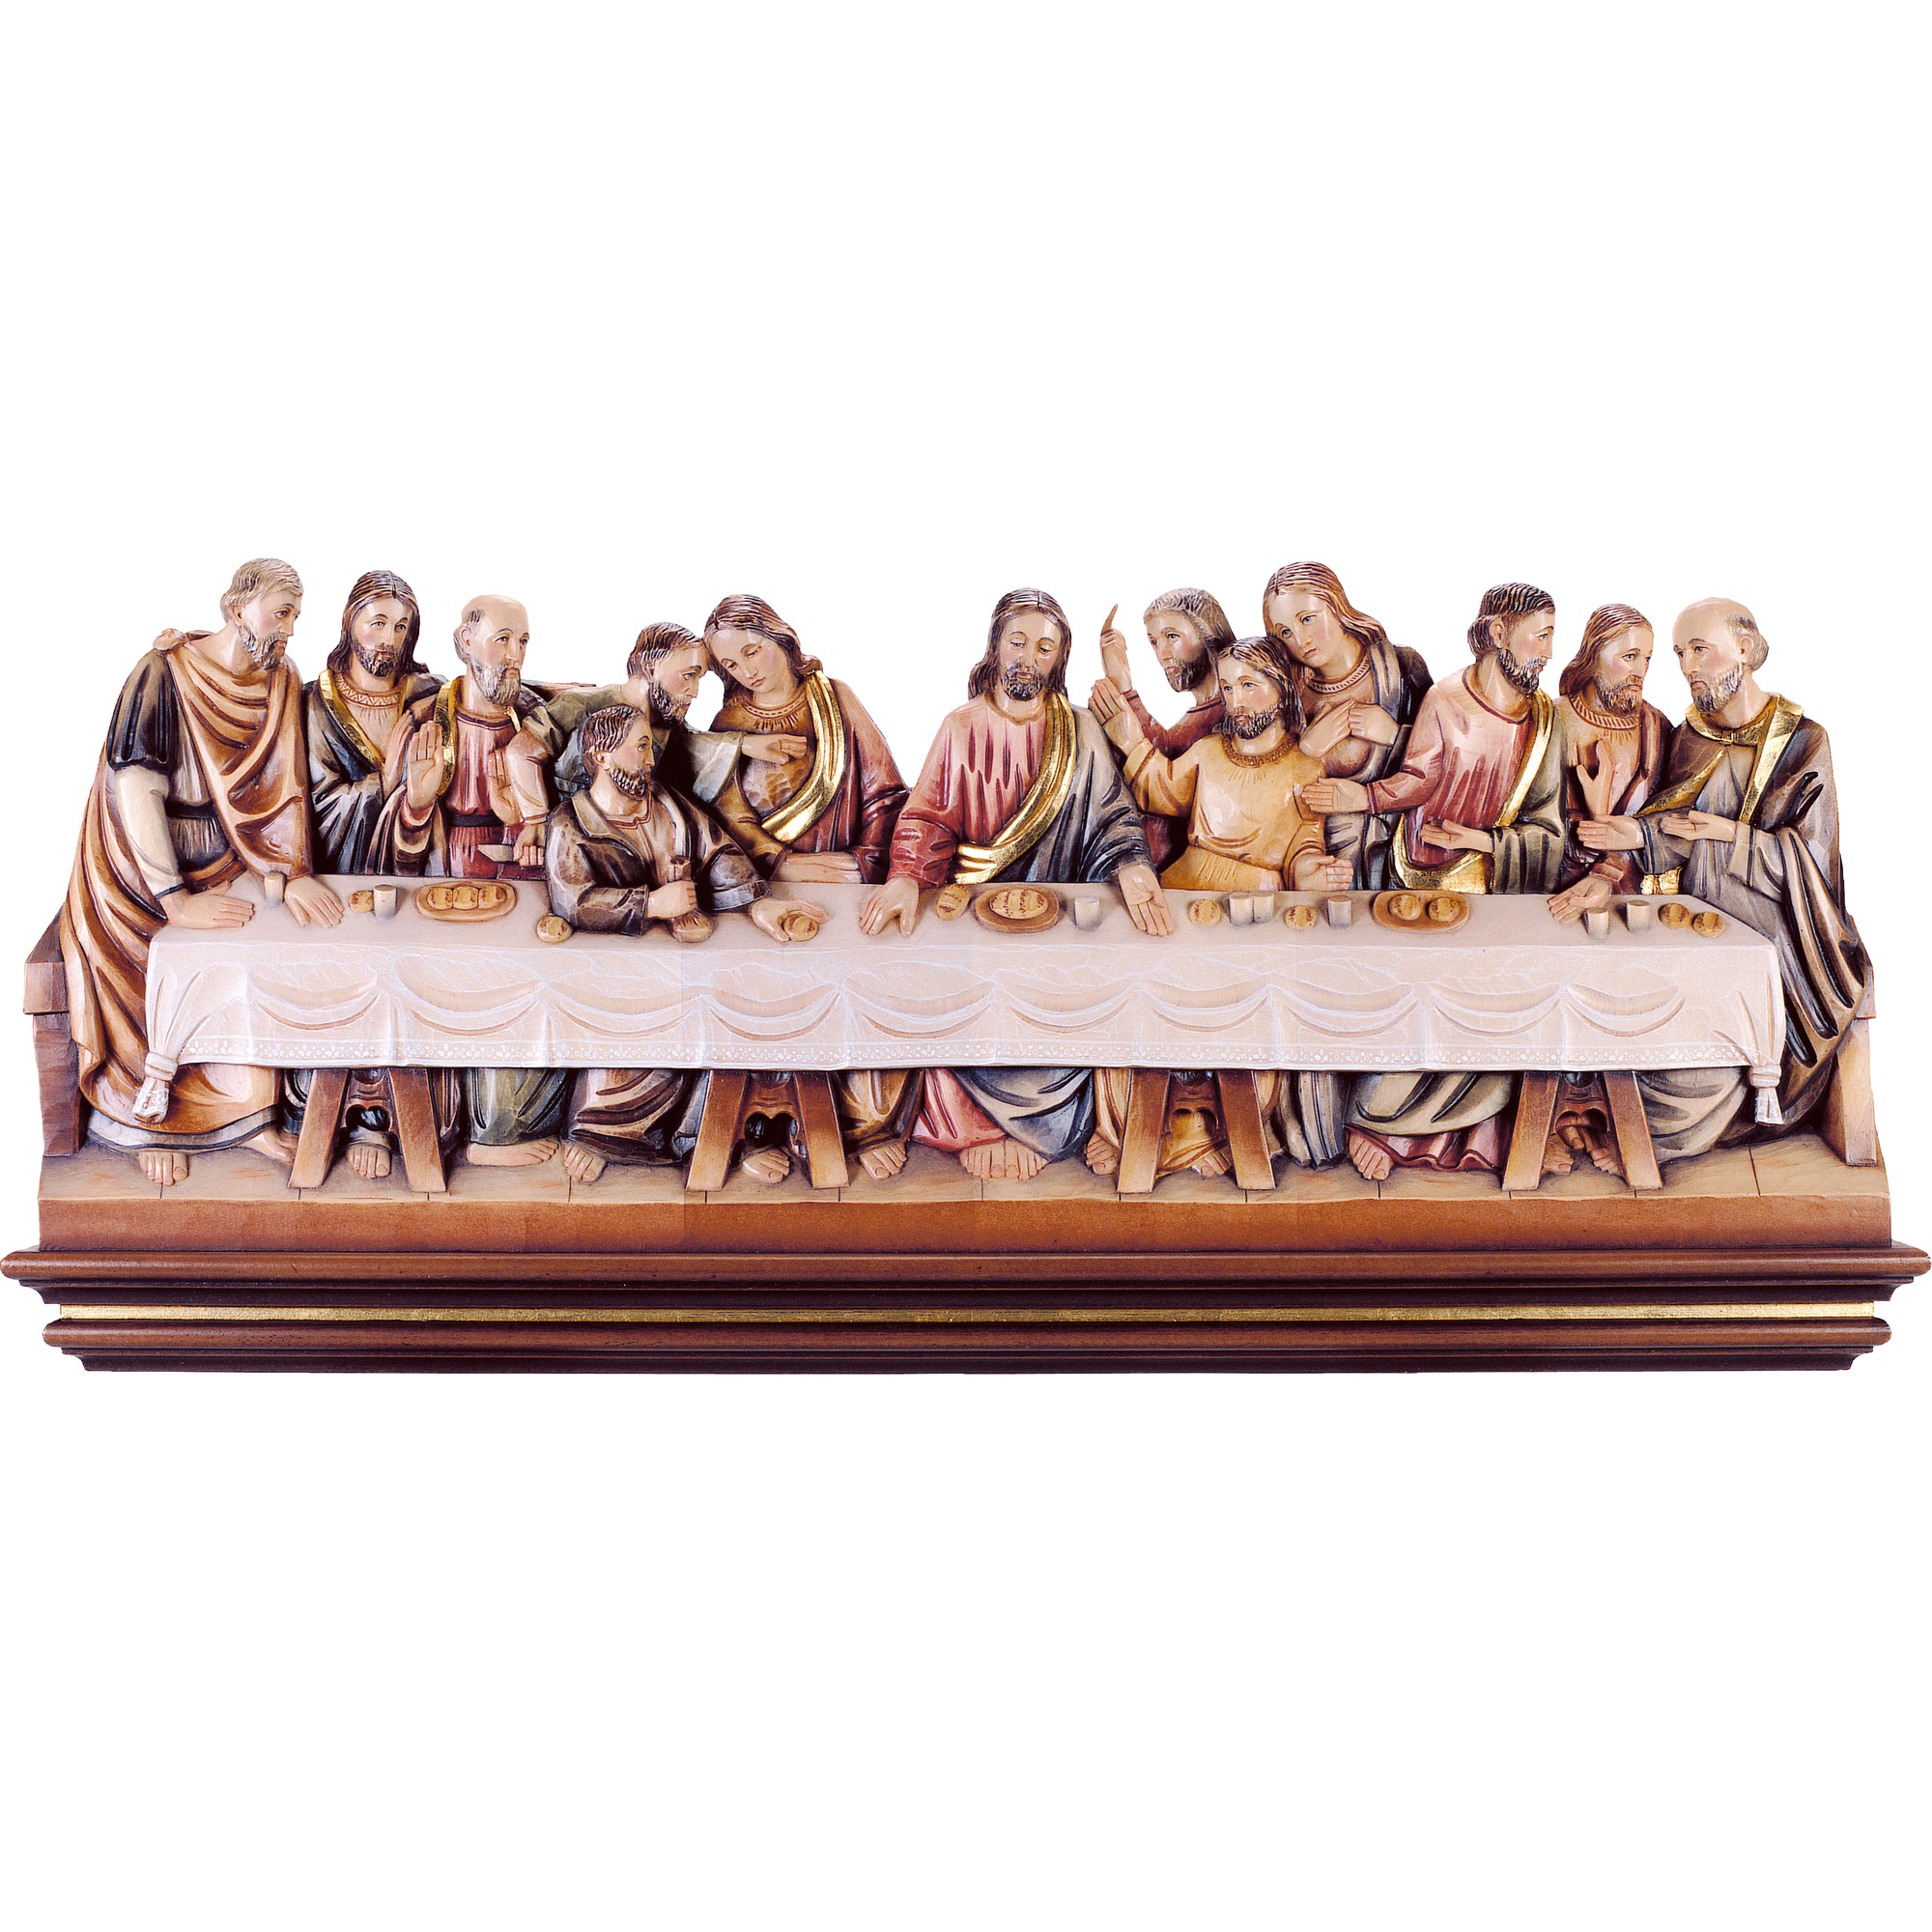 Leonardo Style Last Supper Sculpture - 21